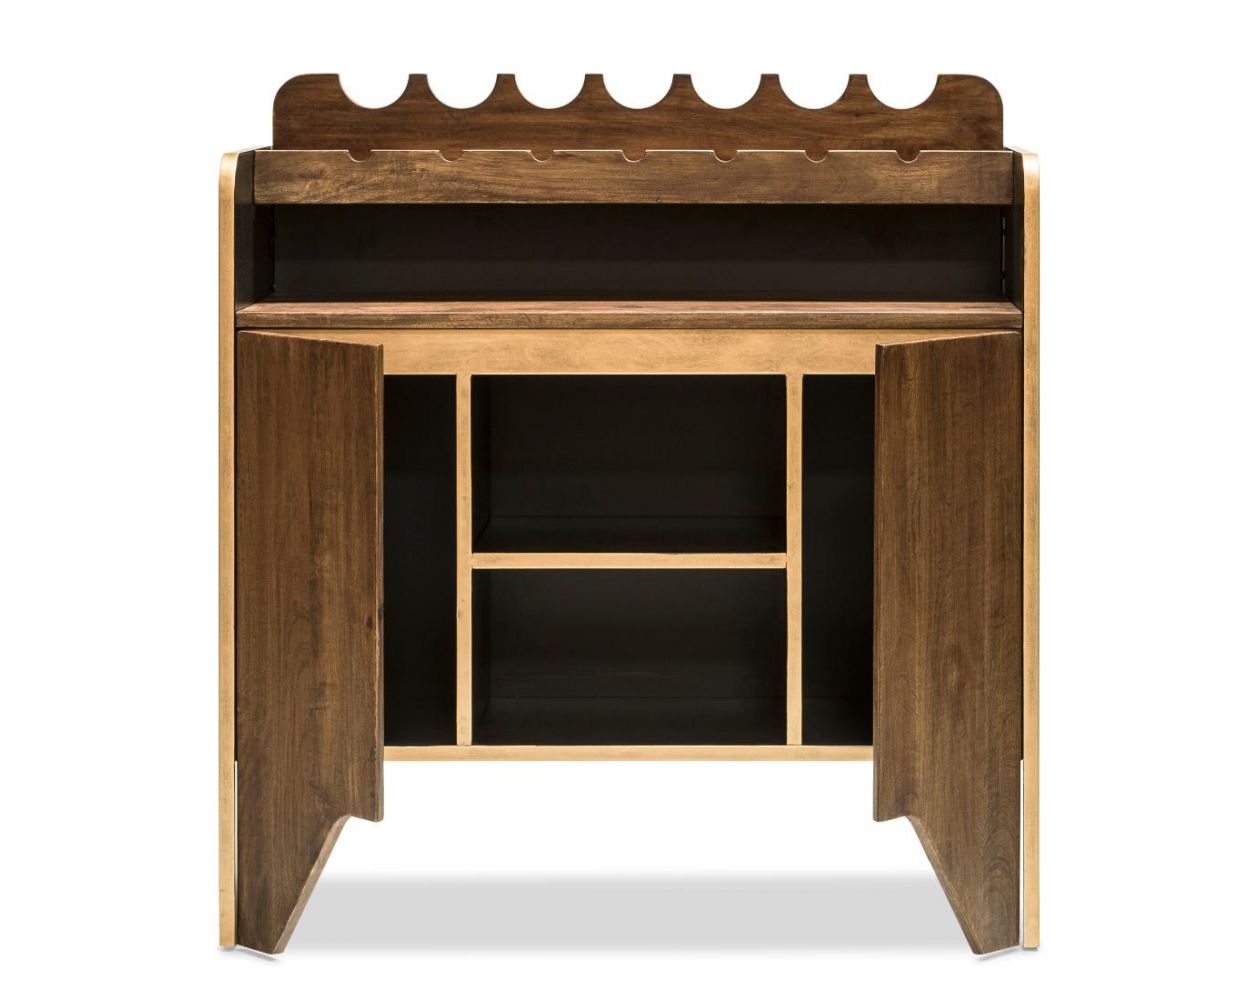 Milano Contemporary Wooden Wine Rack & Bar Cabinet - Lushmist